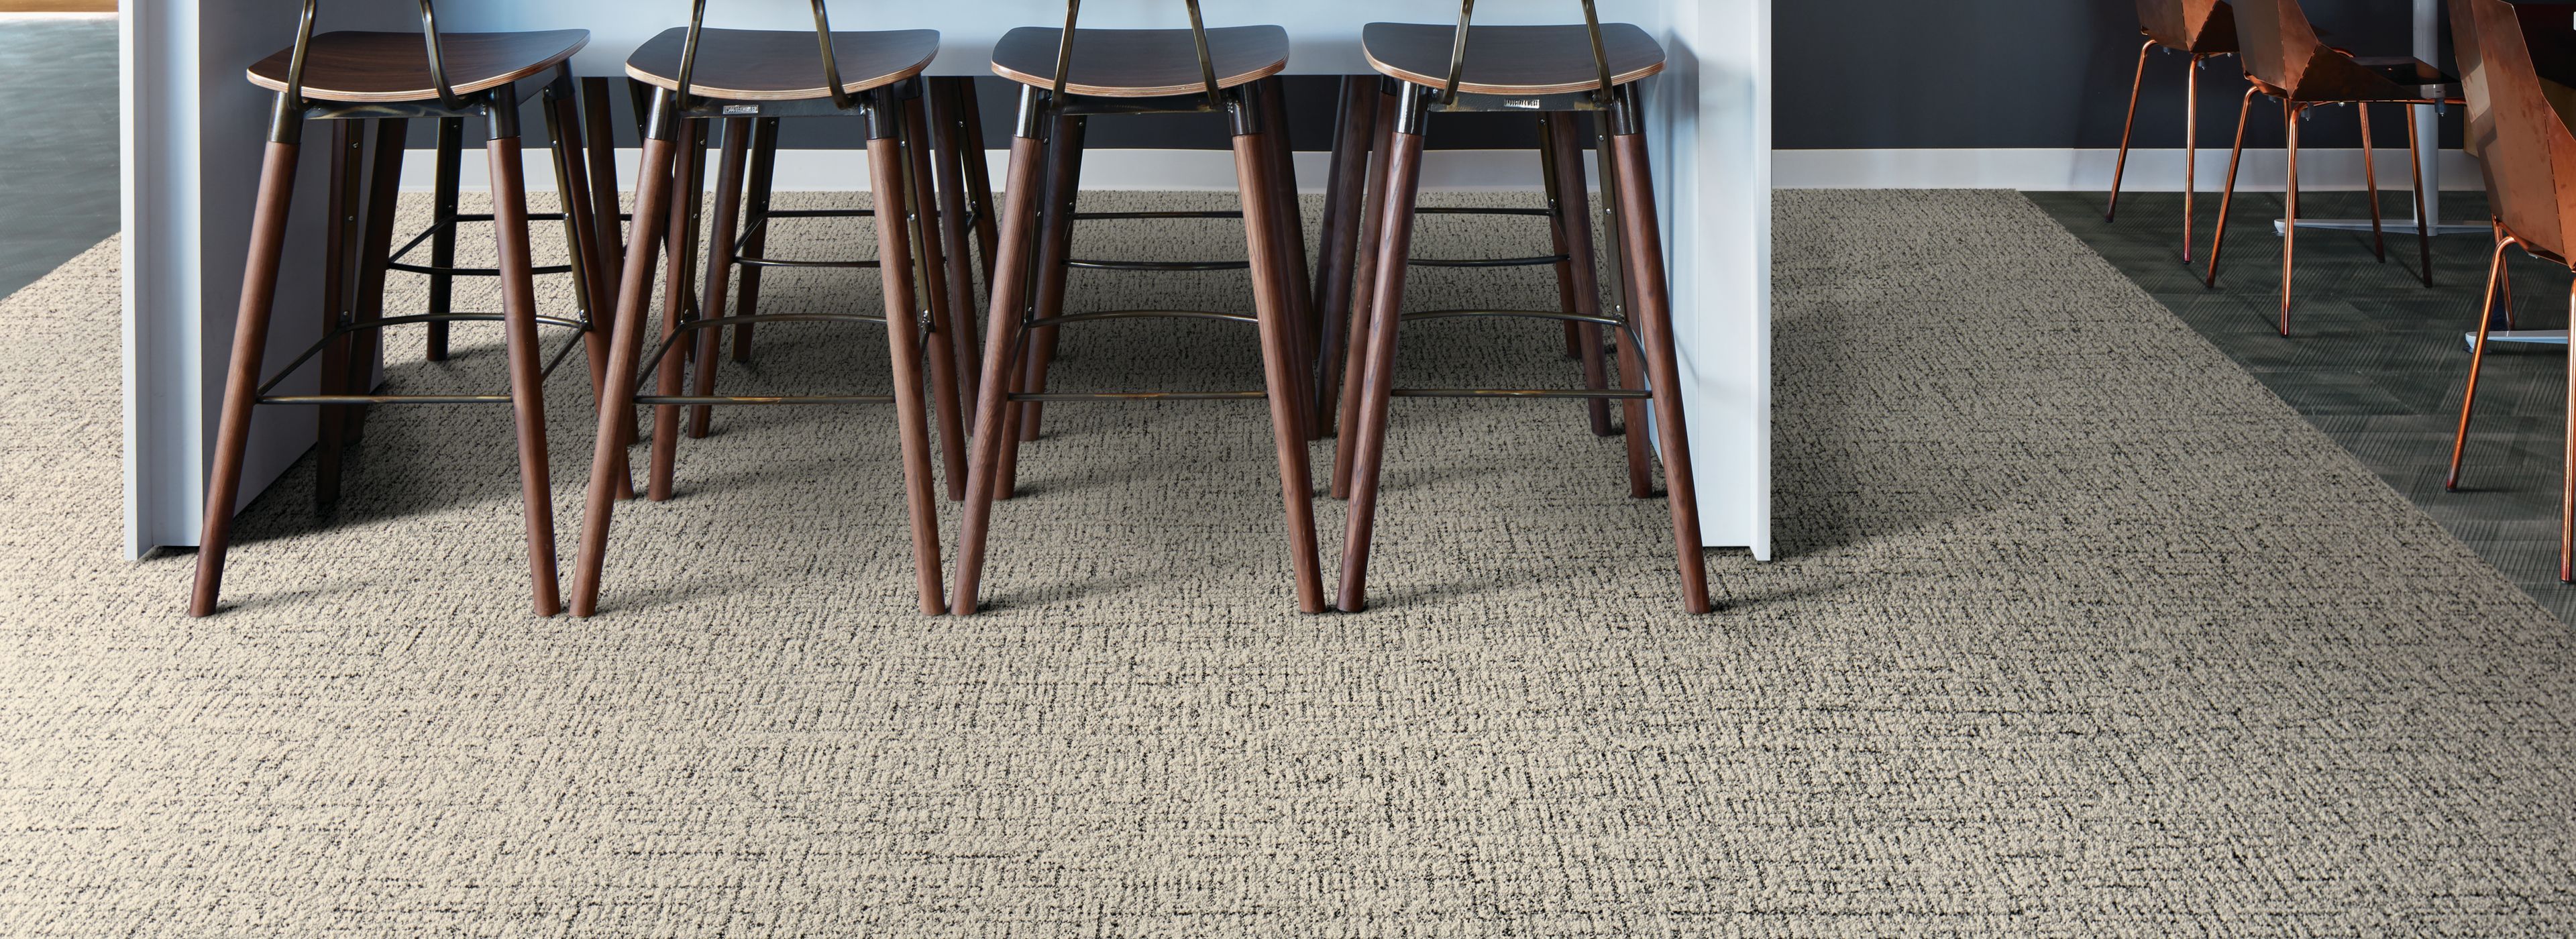 Interface Haptic plank carpet tile and Drawn Lines LVT in public office space with wood grid ceiling número de imagen 1